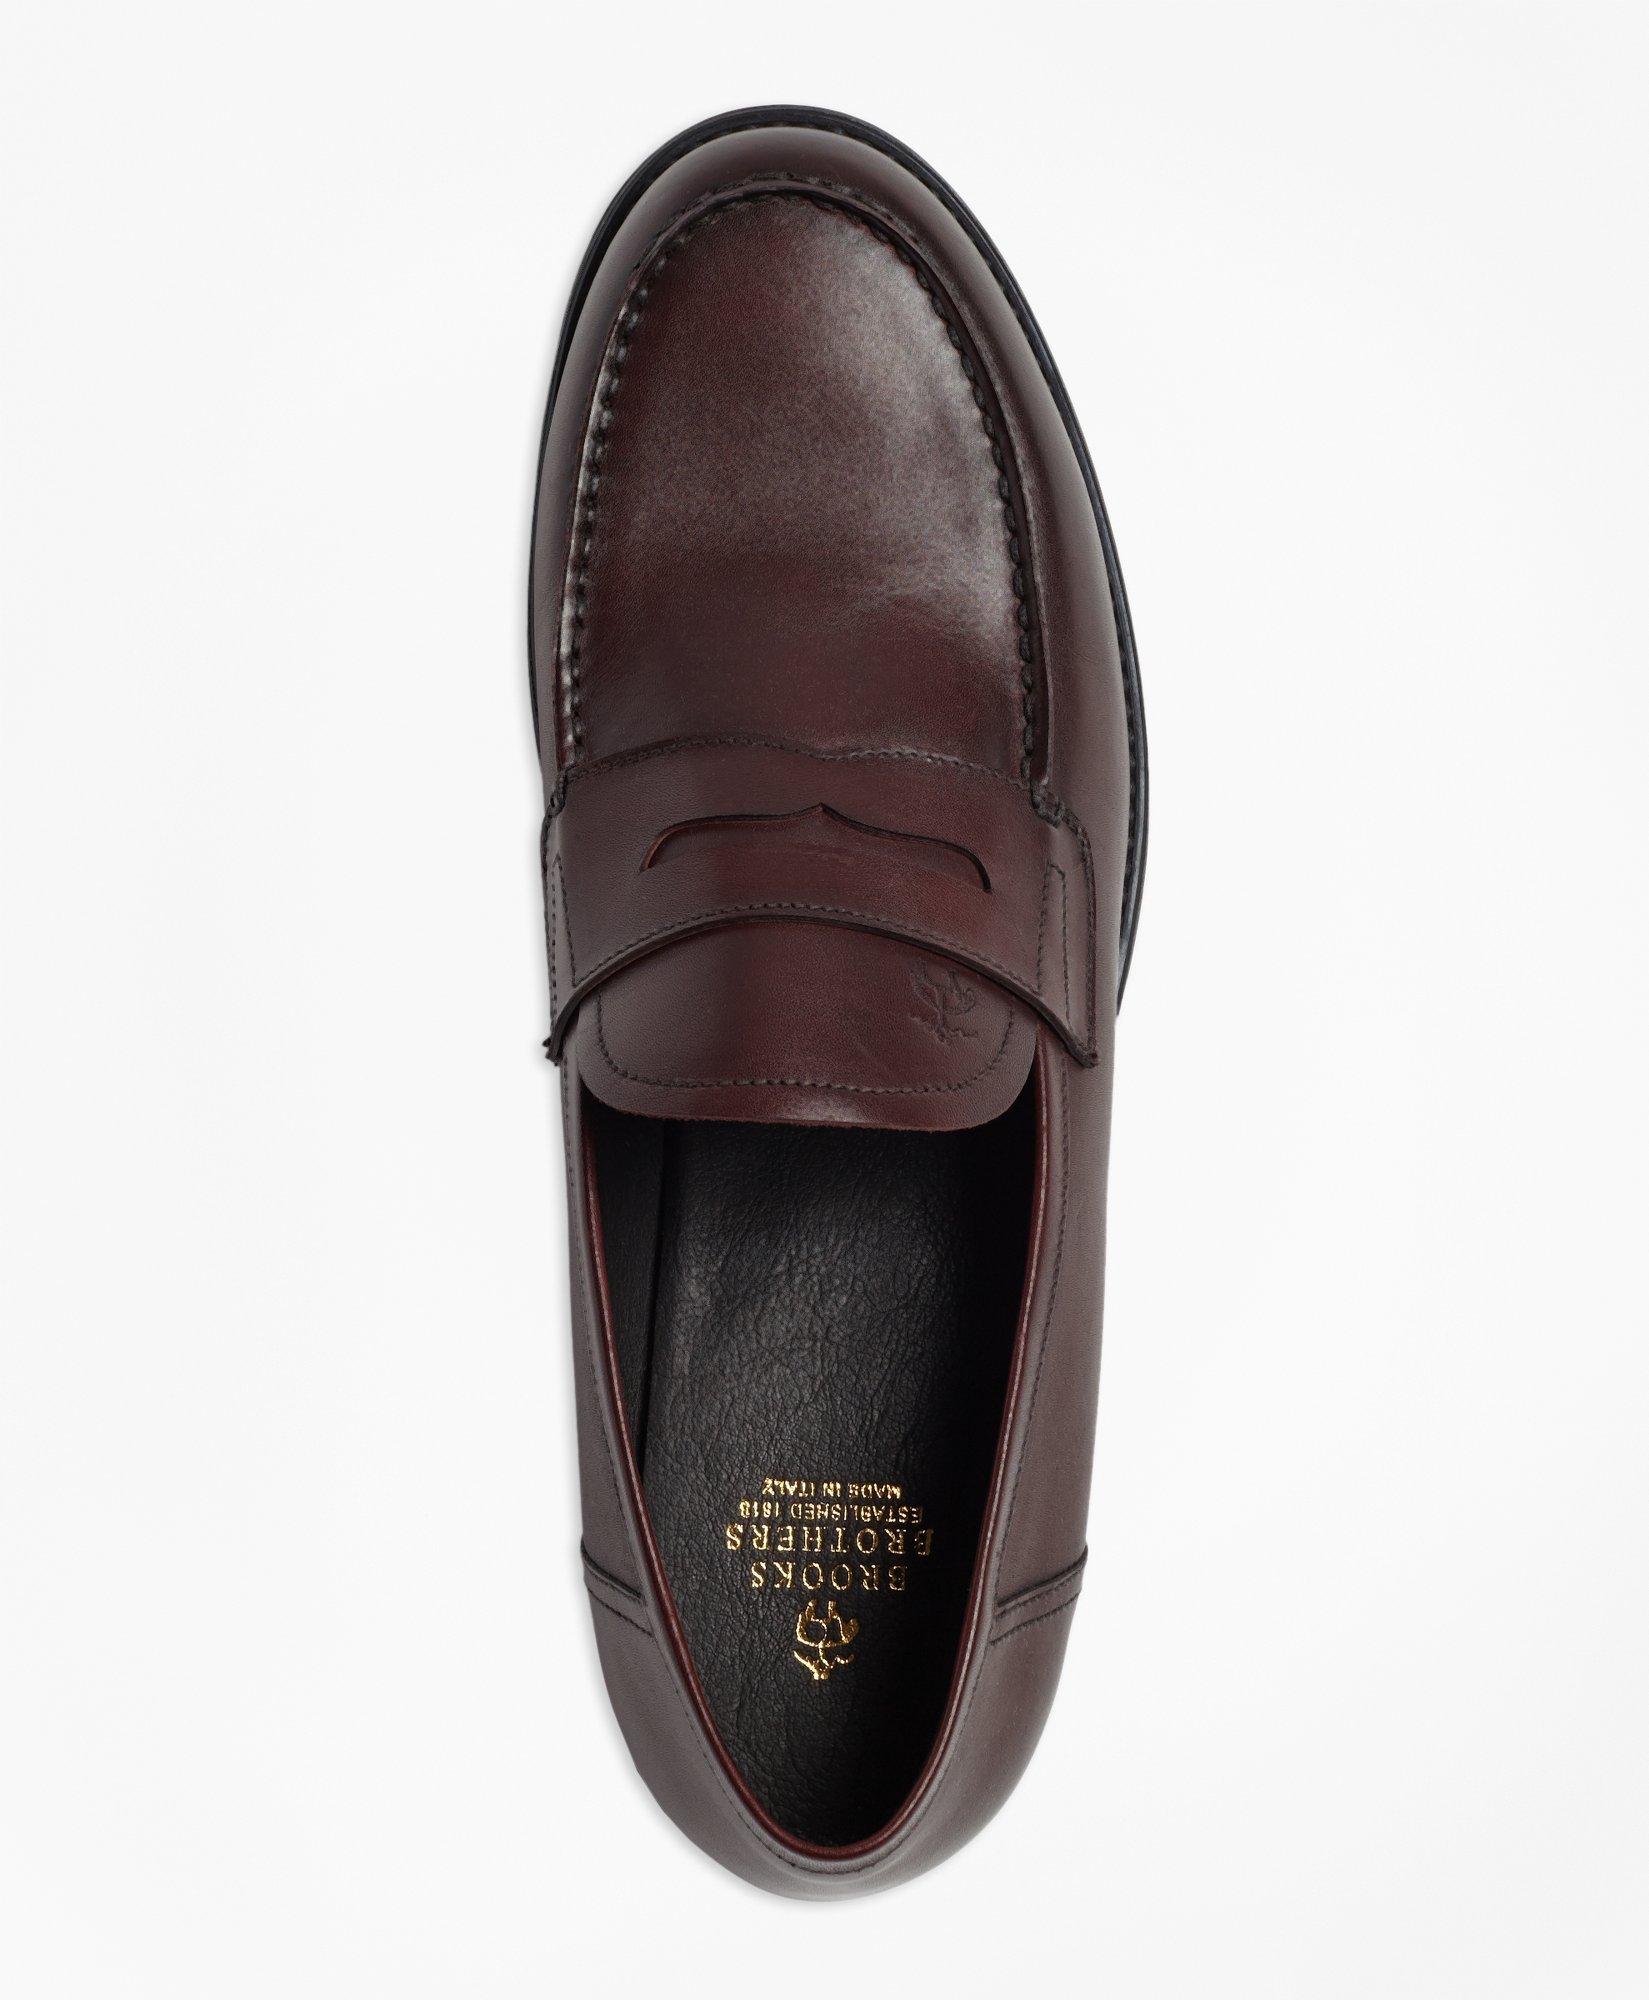 1818 Footwear Leather Penny Loafers